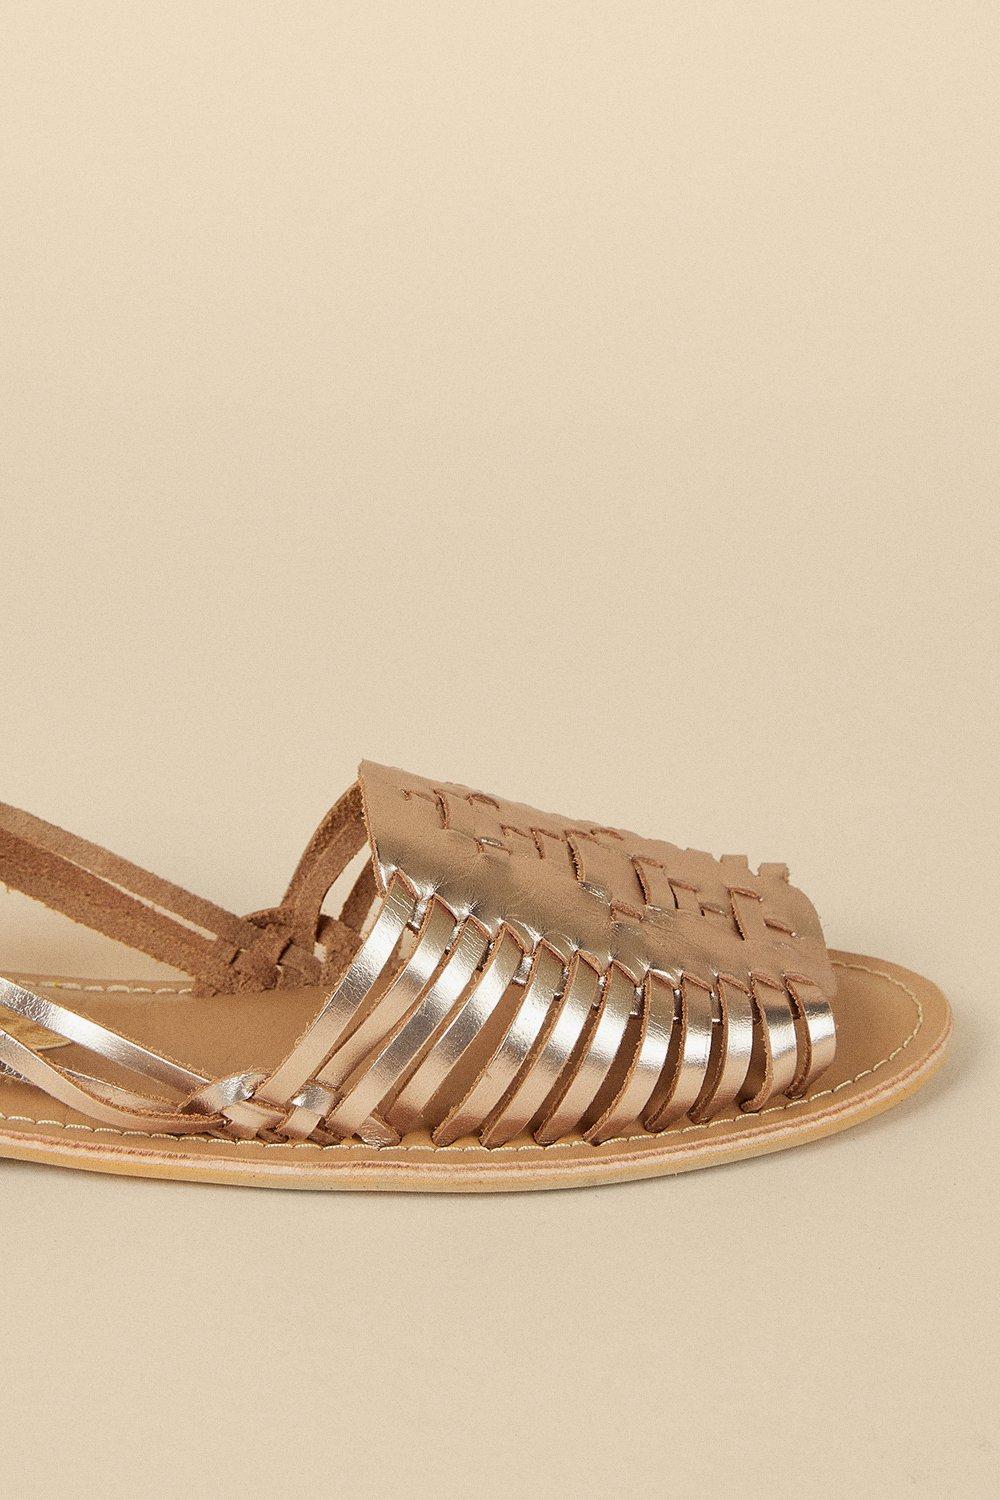 oasis huarache sandals